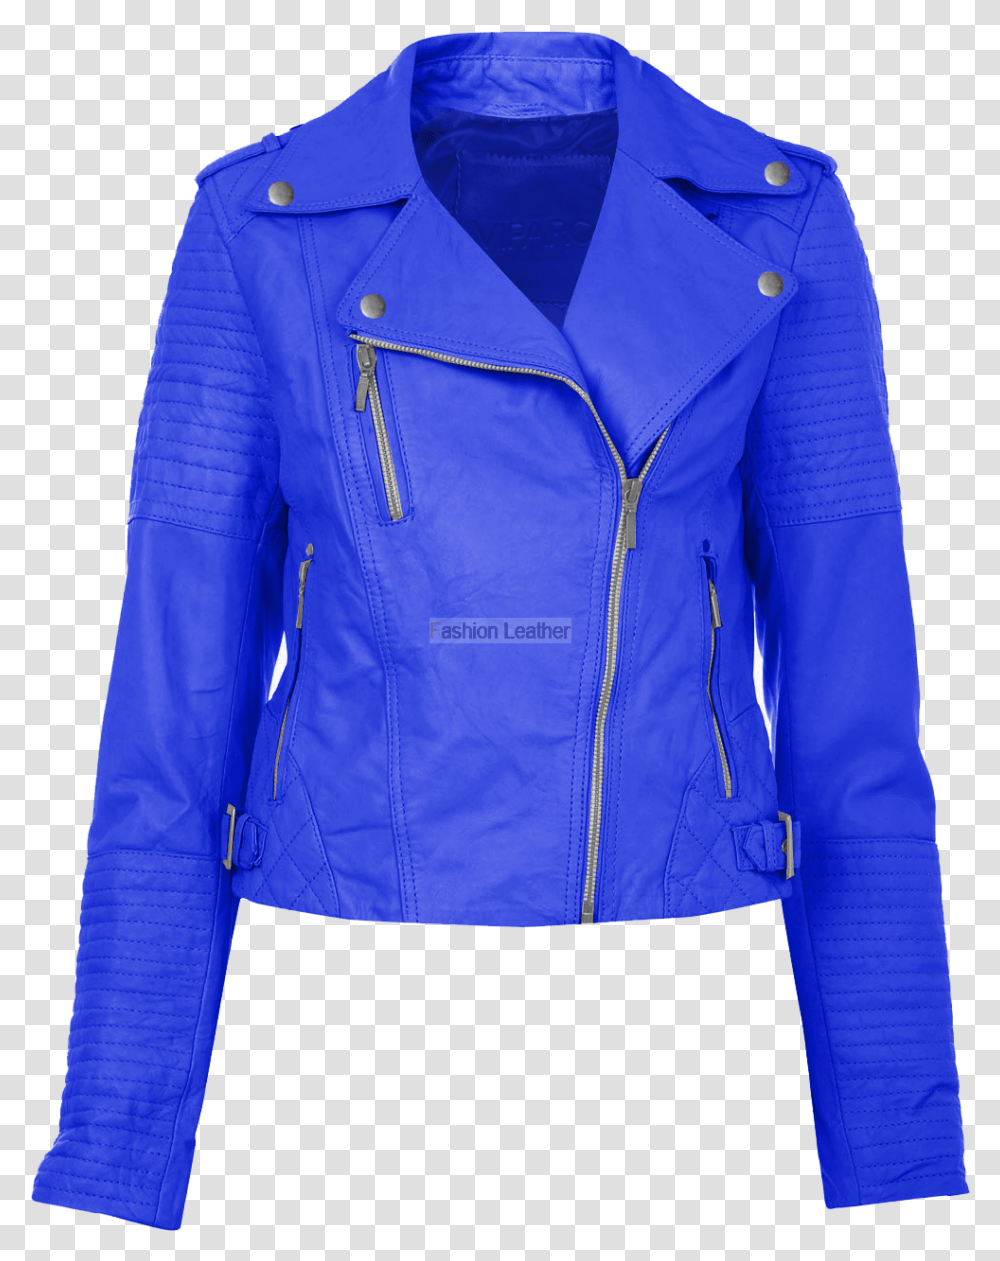 Blue Jacket Image With Background Red Leather Jacket, Apparel, Coat, Blazer Transparent Png